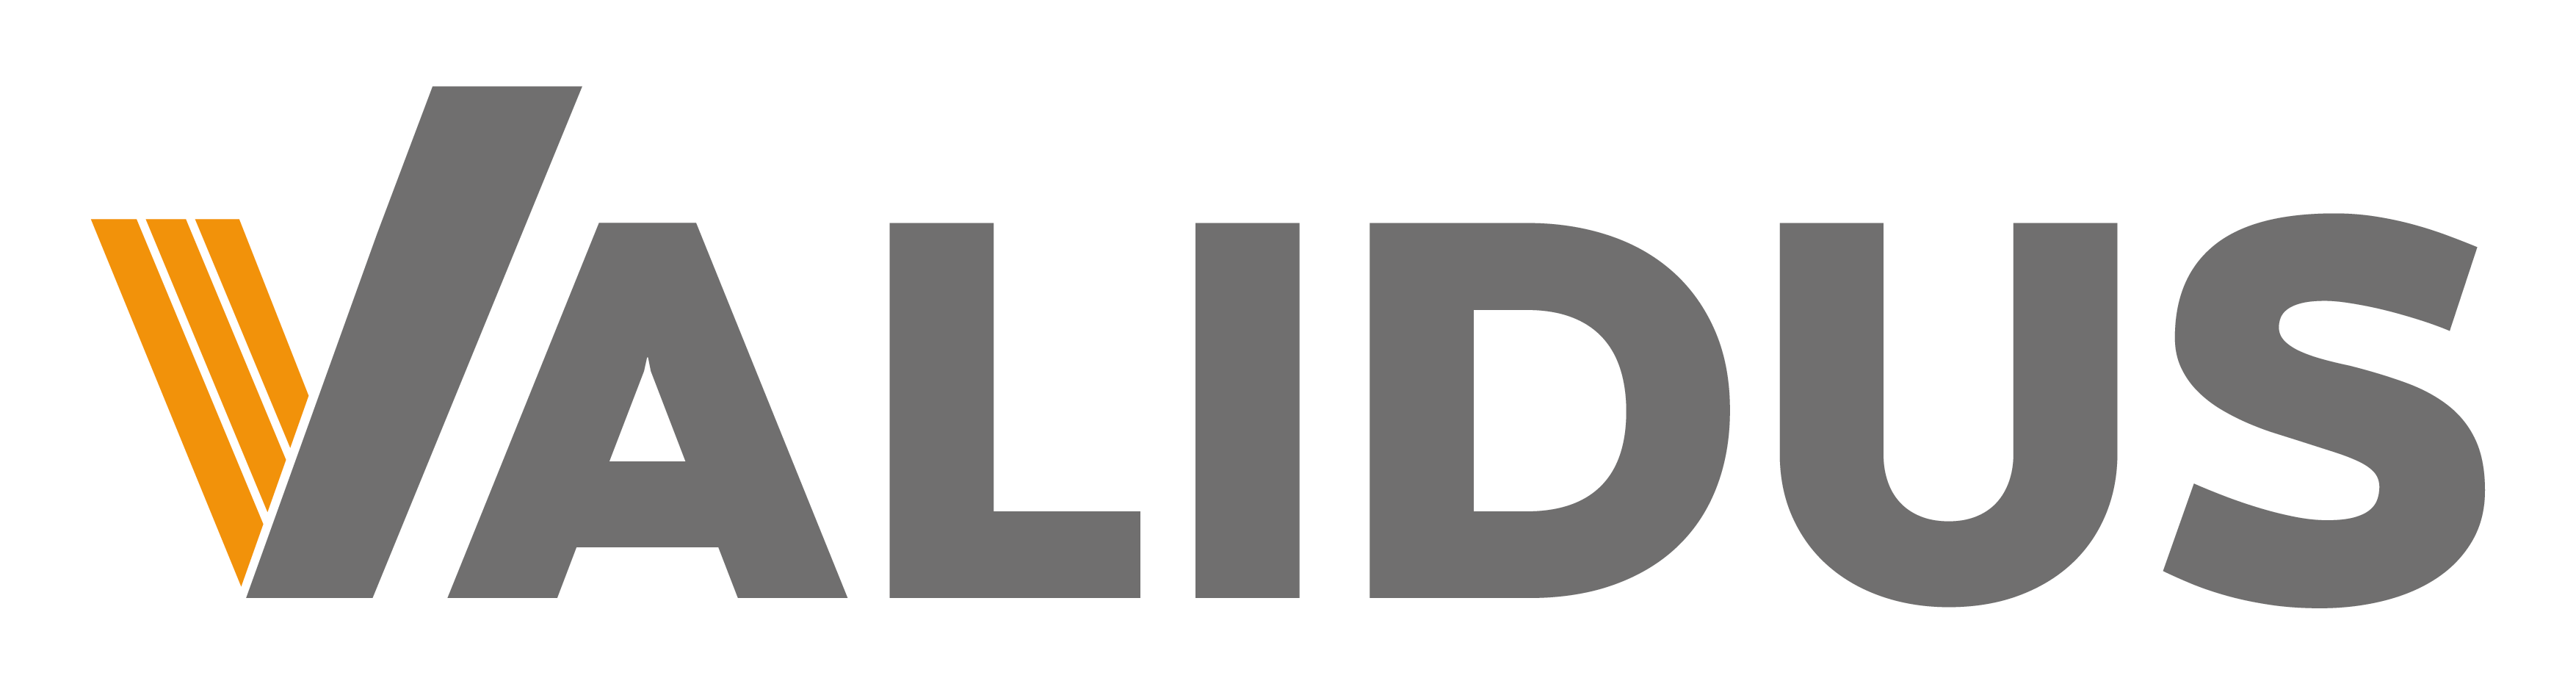 Validus_Logo_1